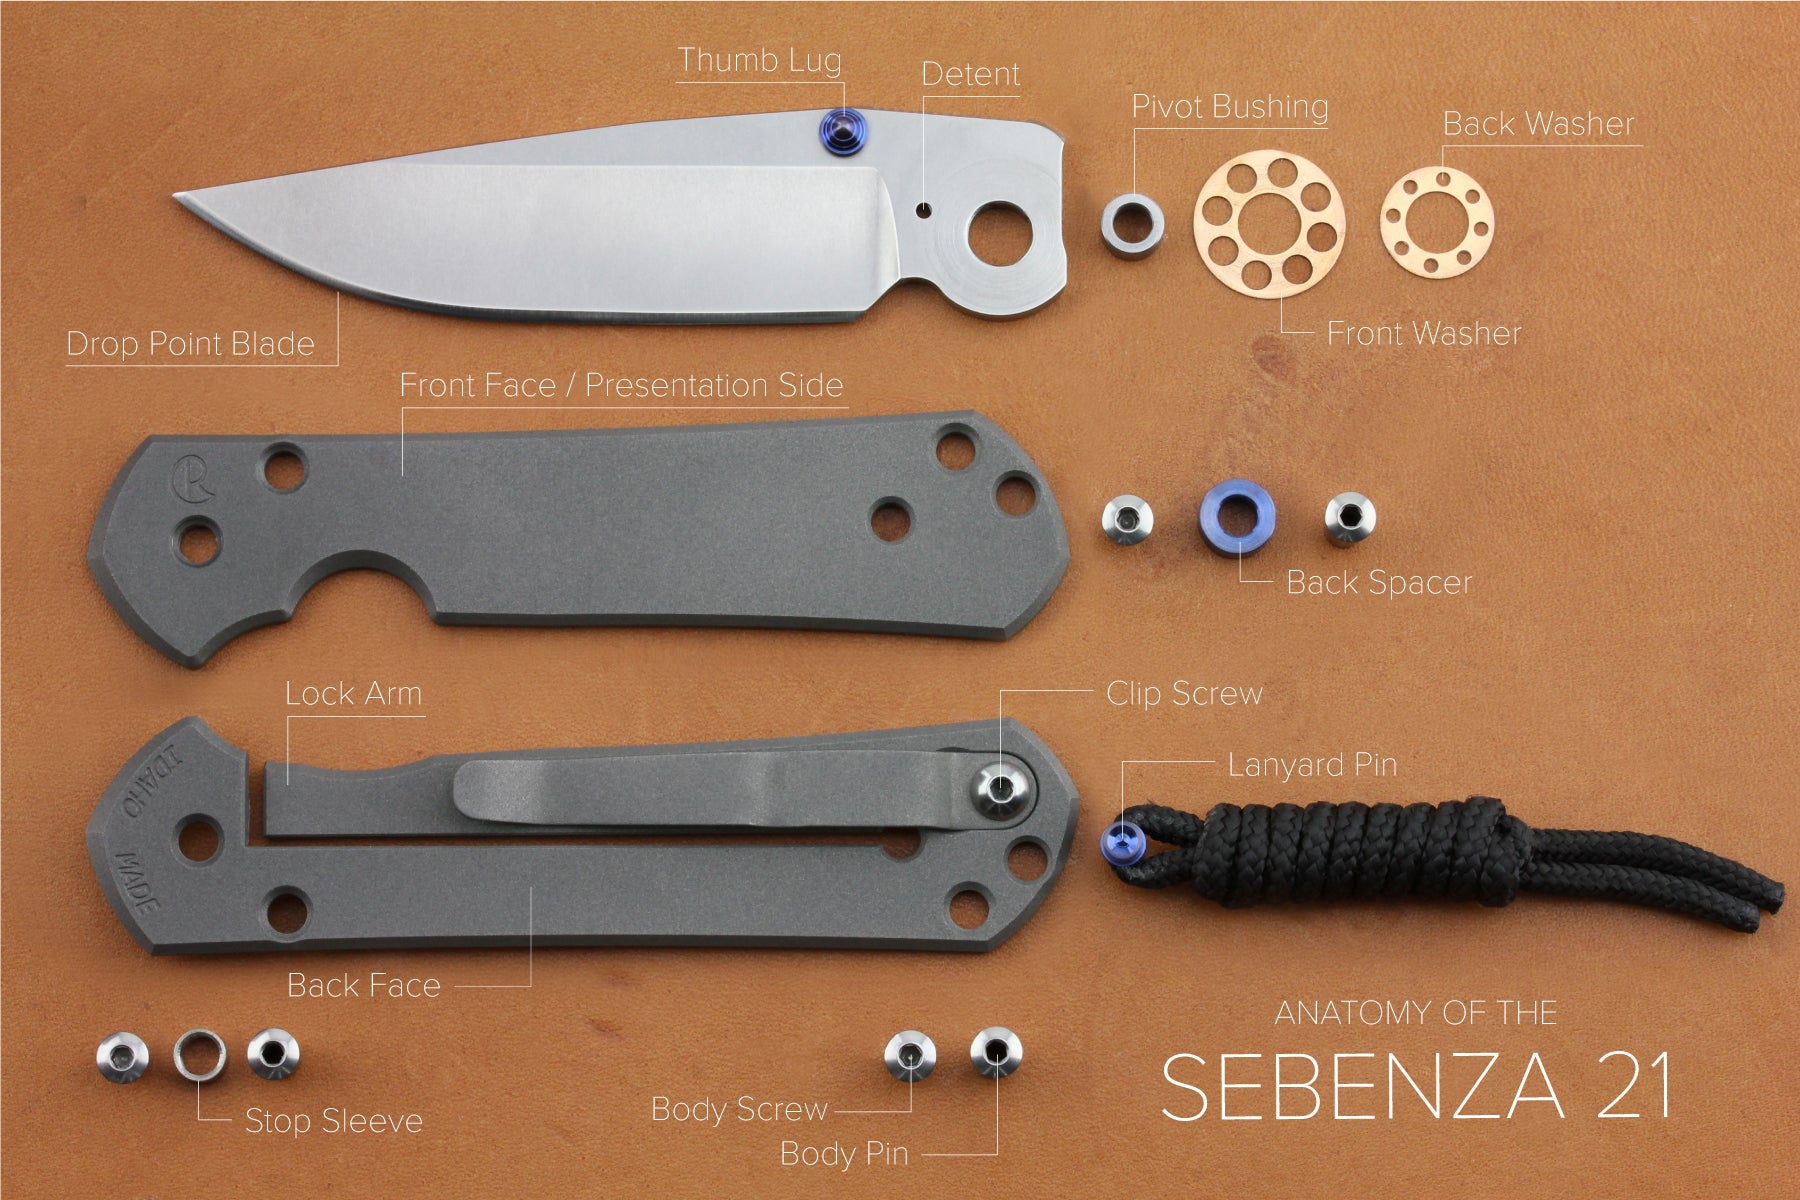 Anatomy of the Sebenza